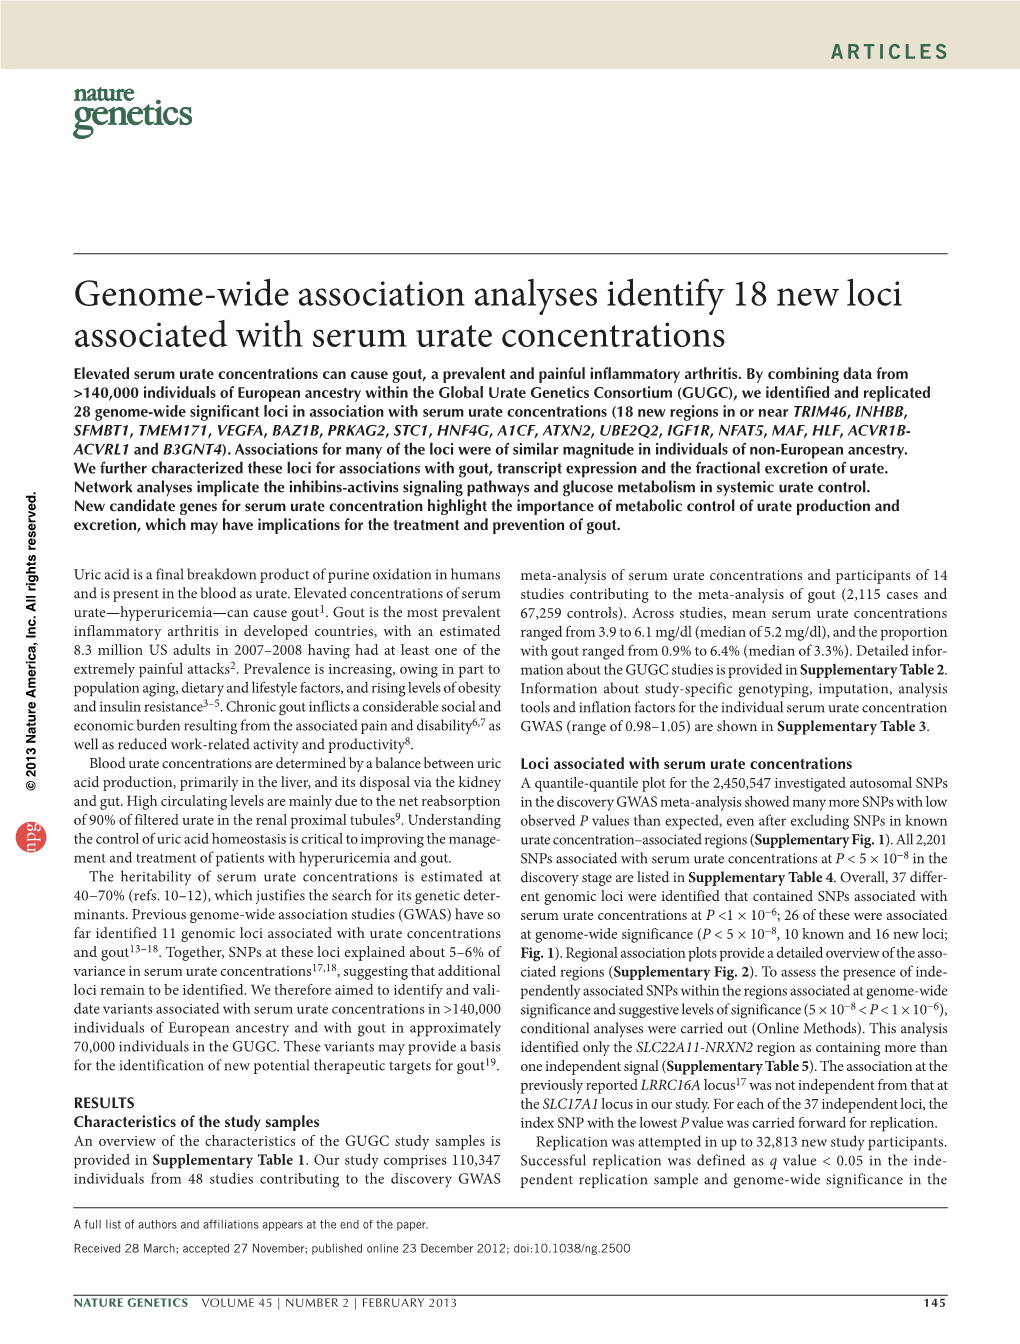 Genome-Wide Association Analyses Identify 18 New